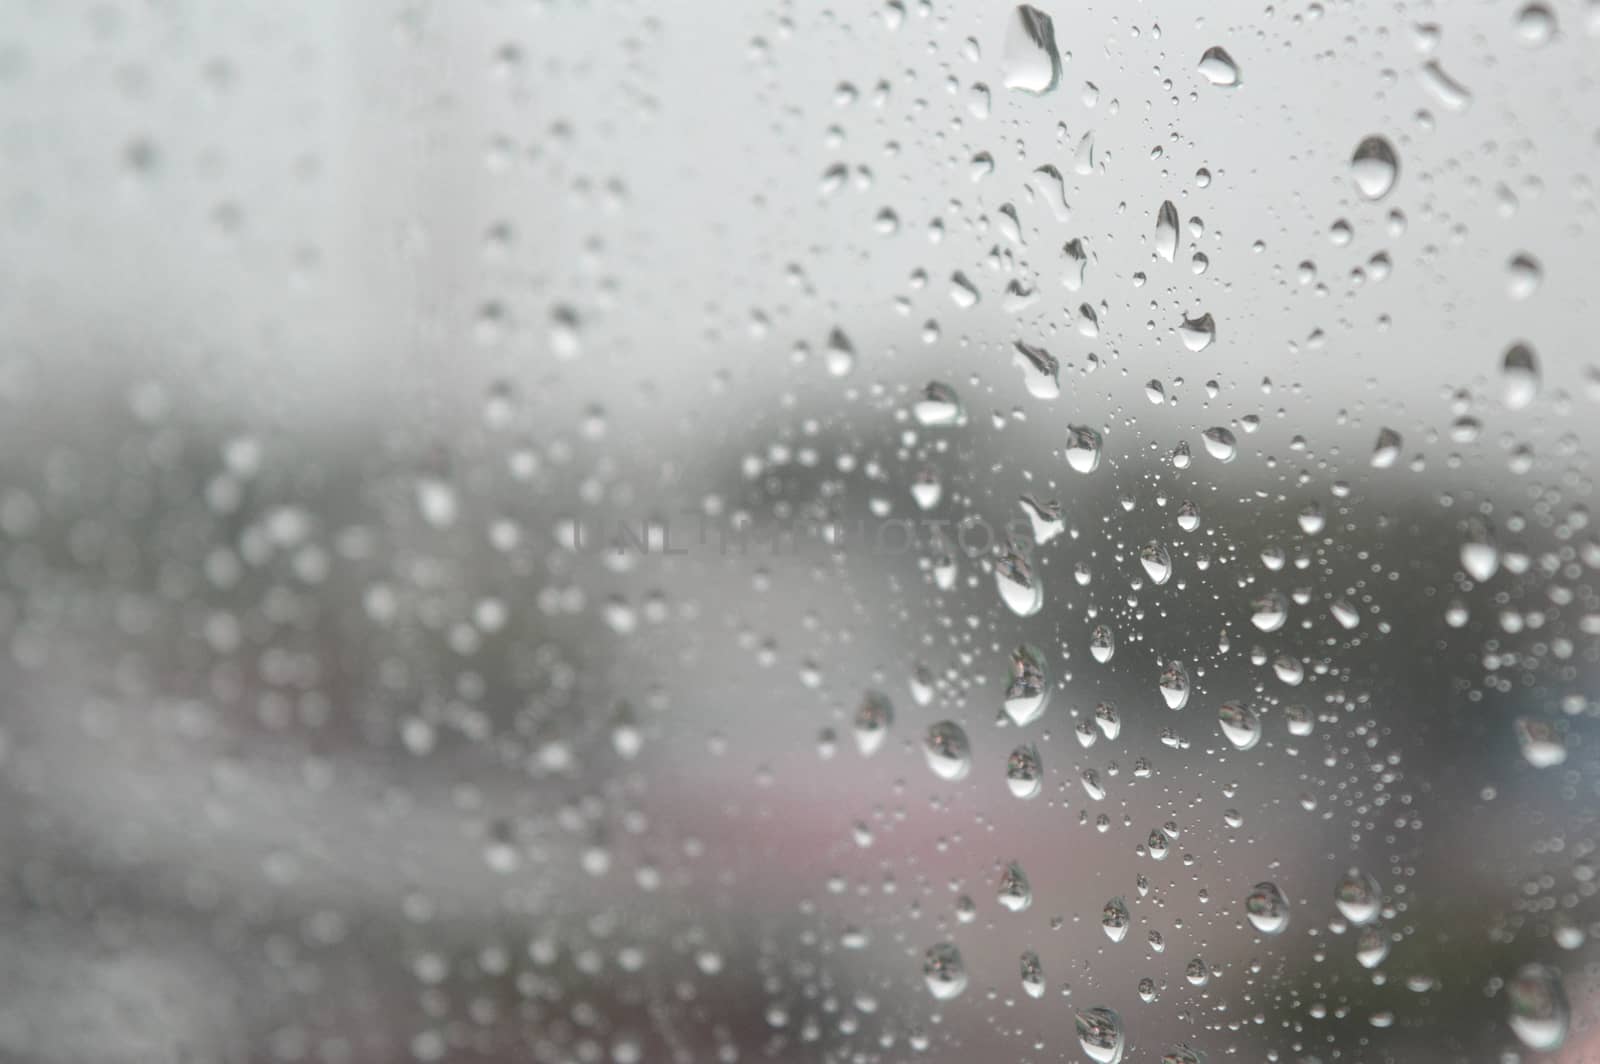 Drops of rain on the window, rainy day by sergpet